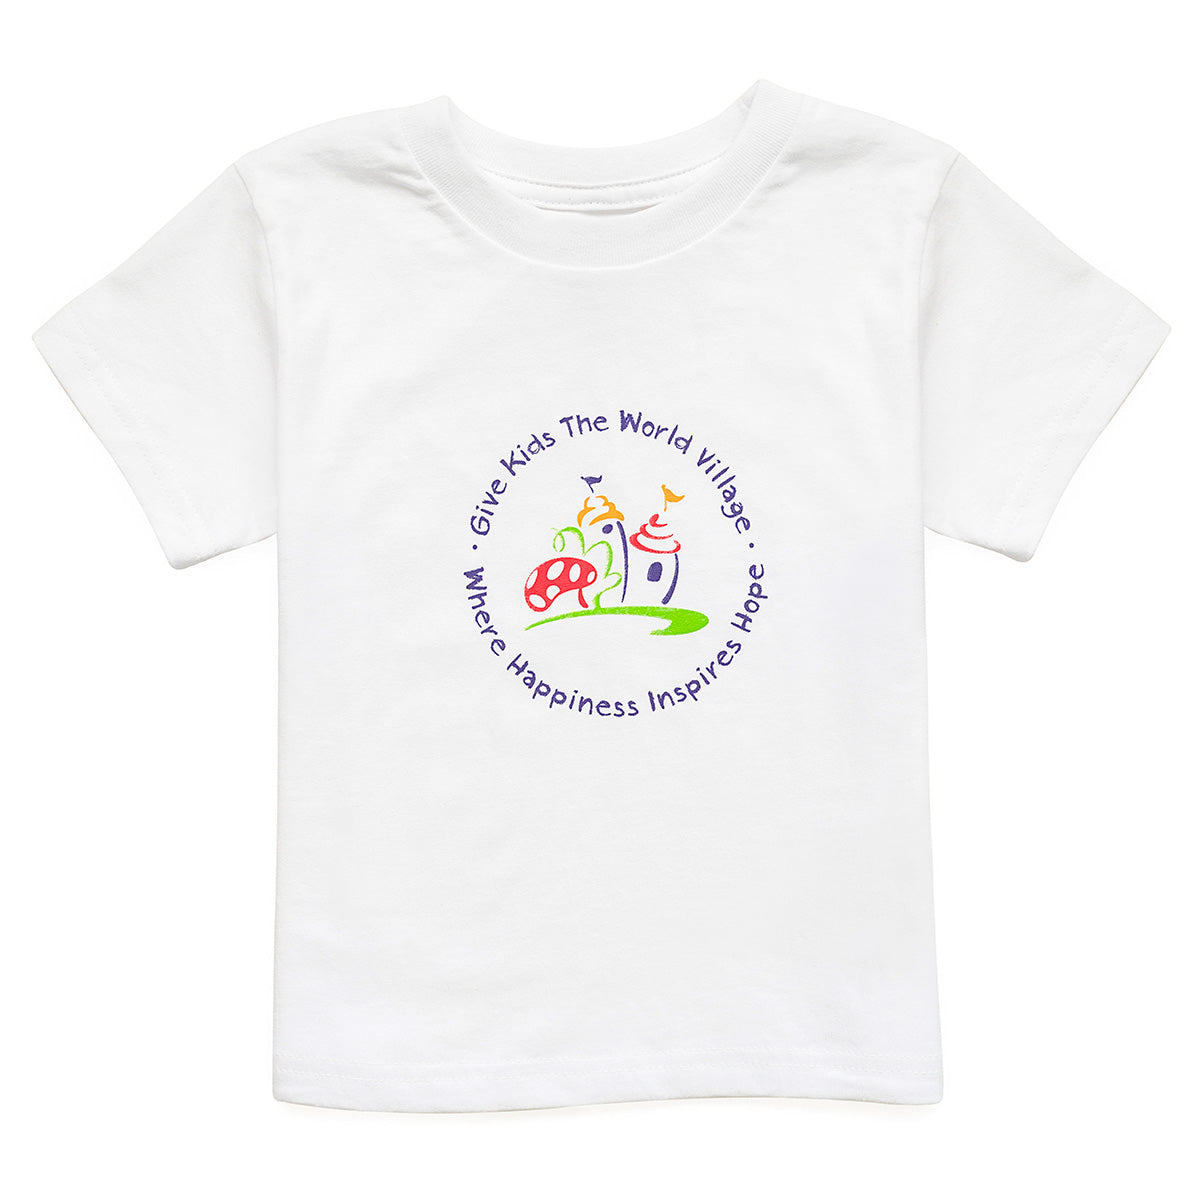 Toddler/Kids Village Logo T-Shirt – Market World\'s The Memory Kids Give